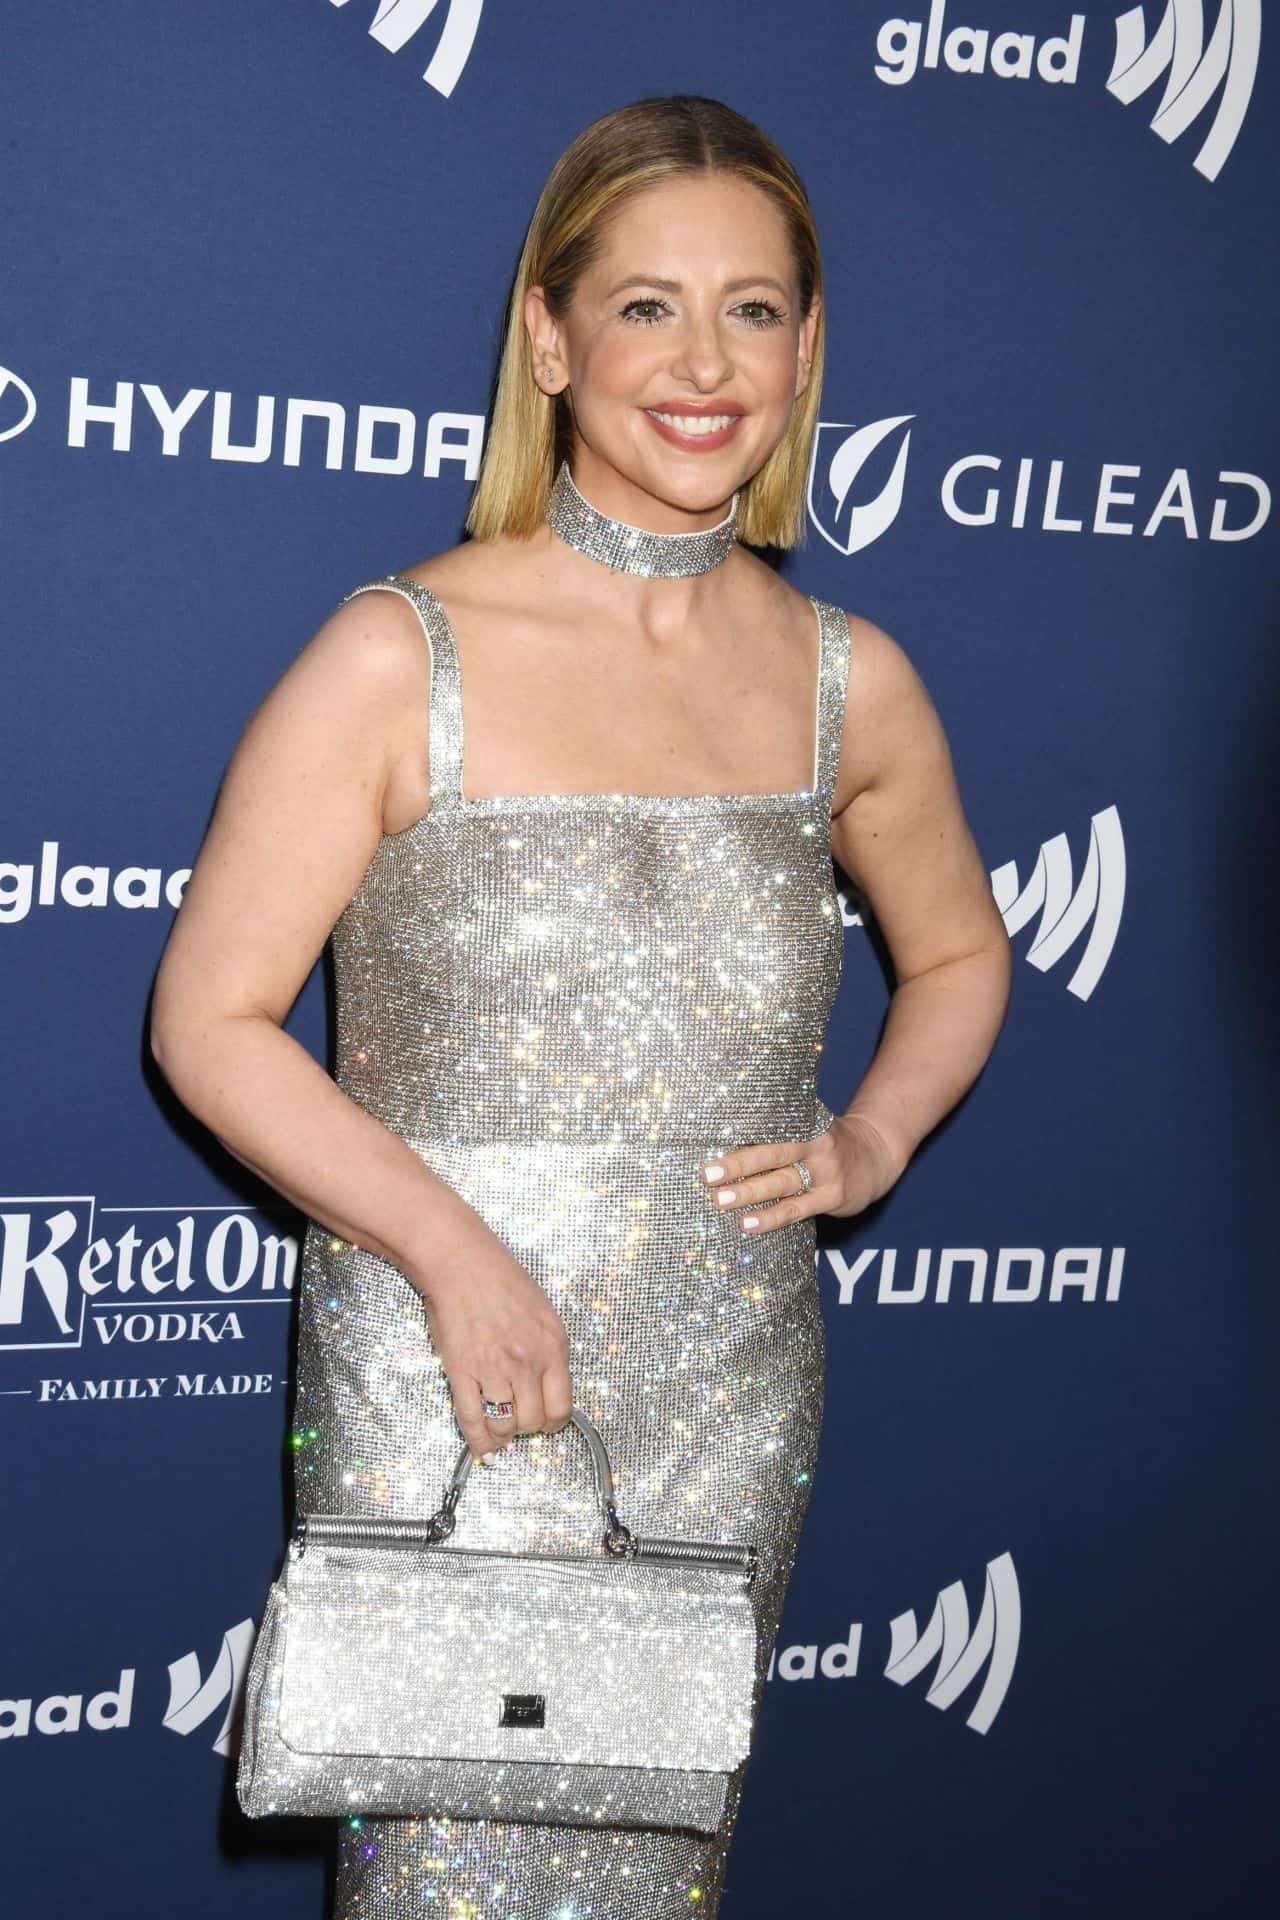 Sarah Michelle Gellar Glows in Silver Dress at GLAAD Media Awards 2023